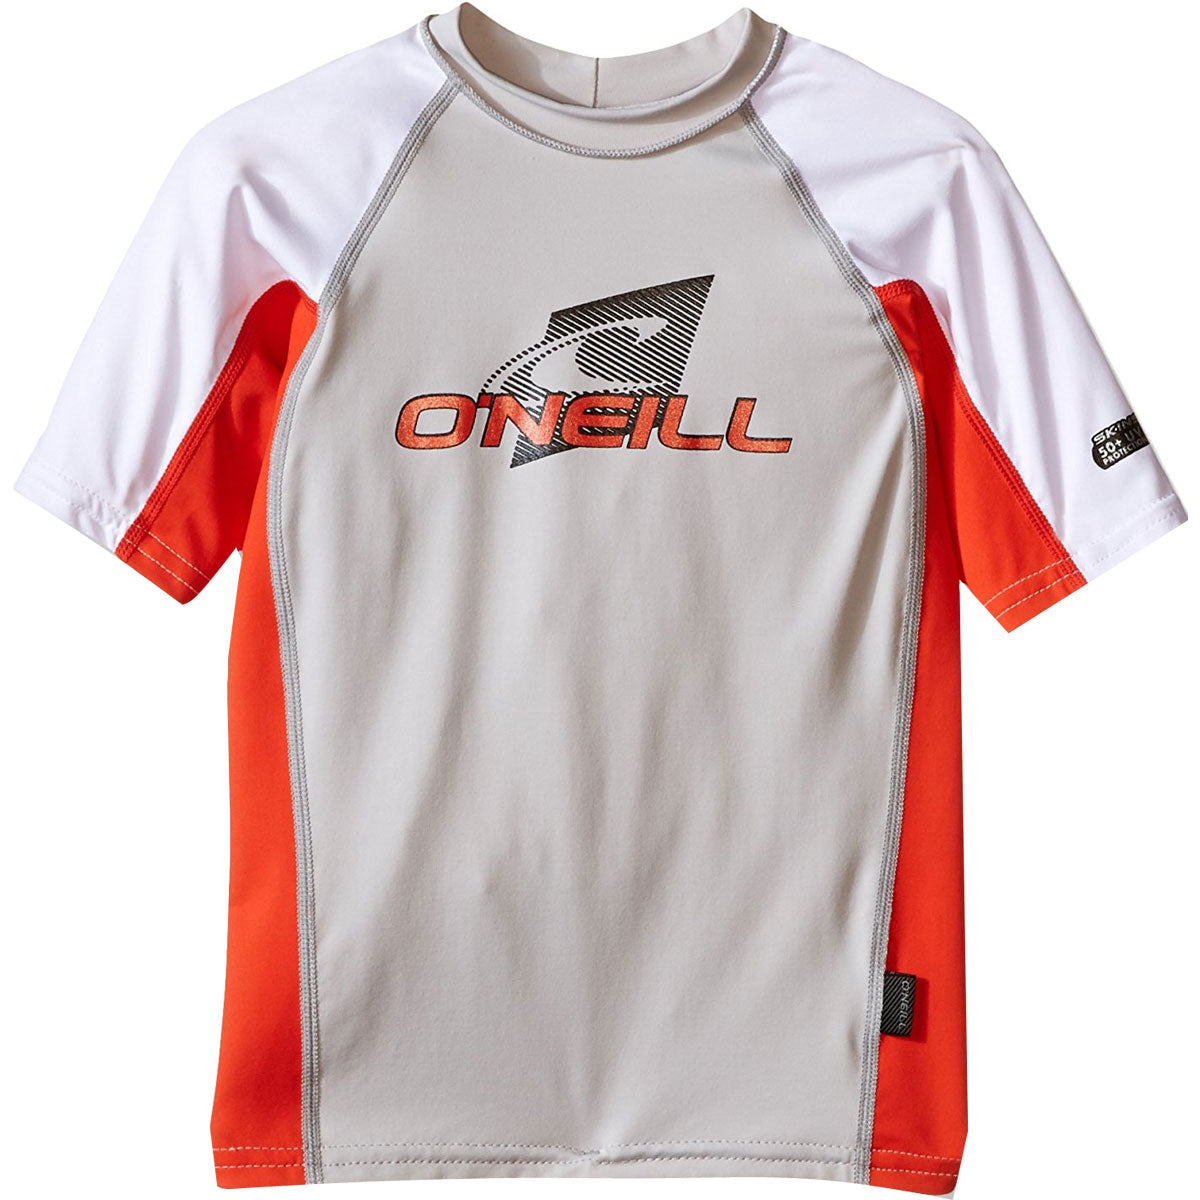 O'Neill Premium Skins Youth Boys Short-Sleeve Rashguard Suit - Lime/Deep Teal/Lunar